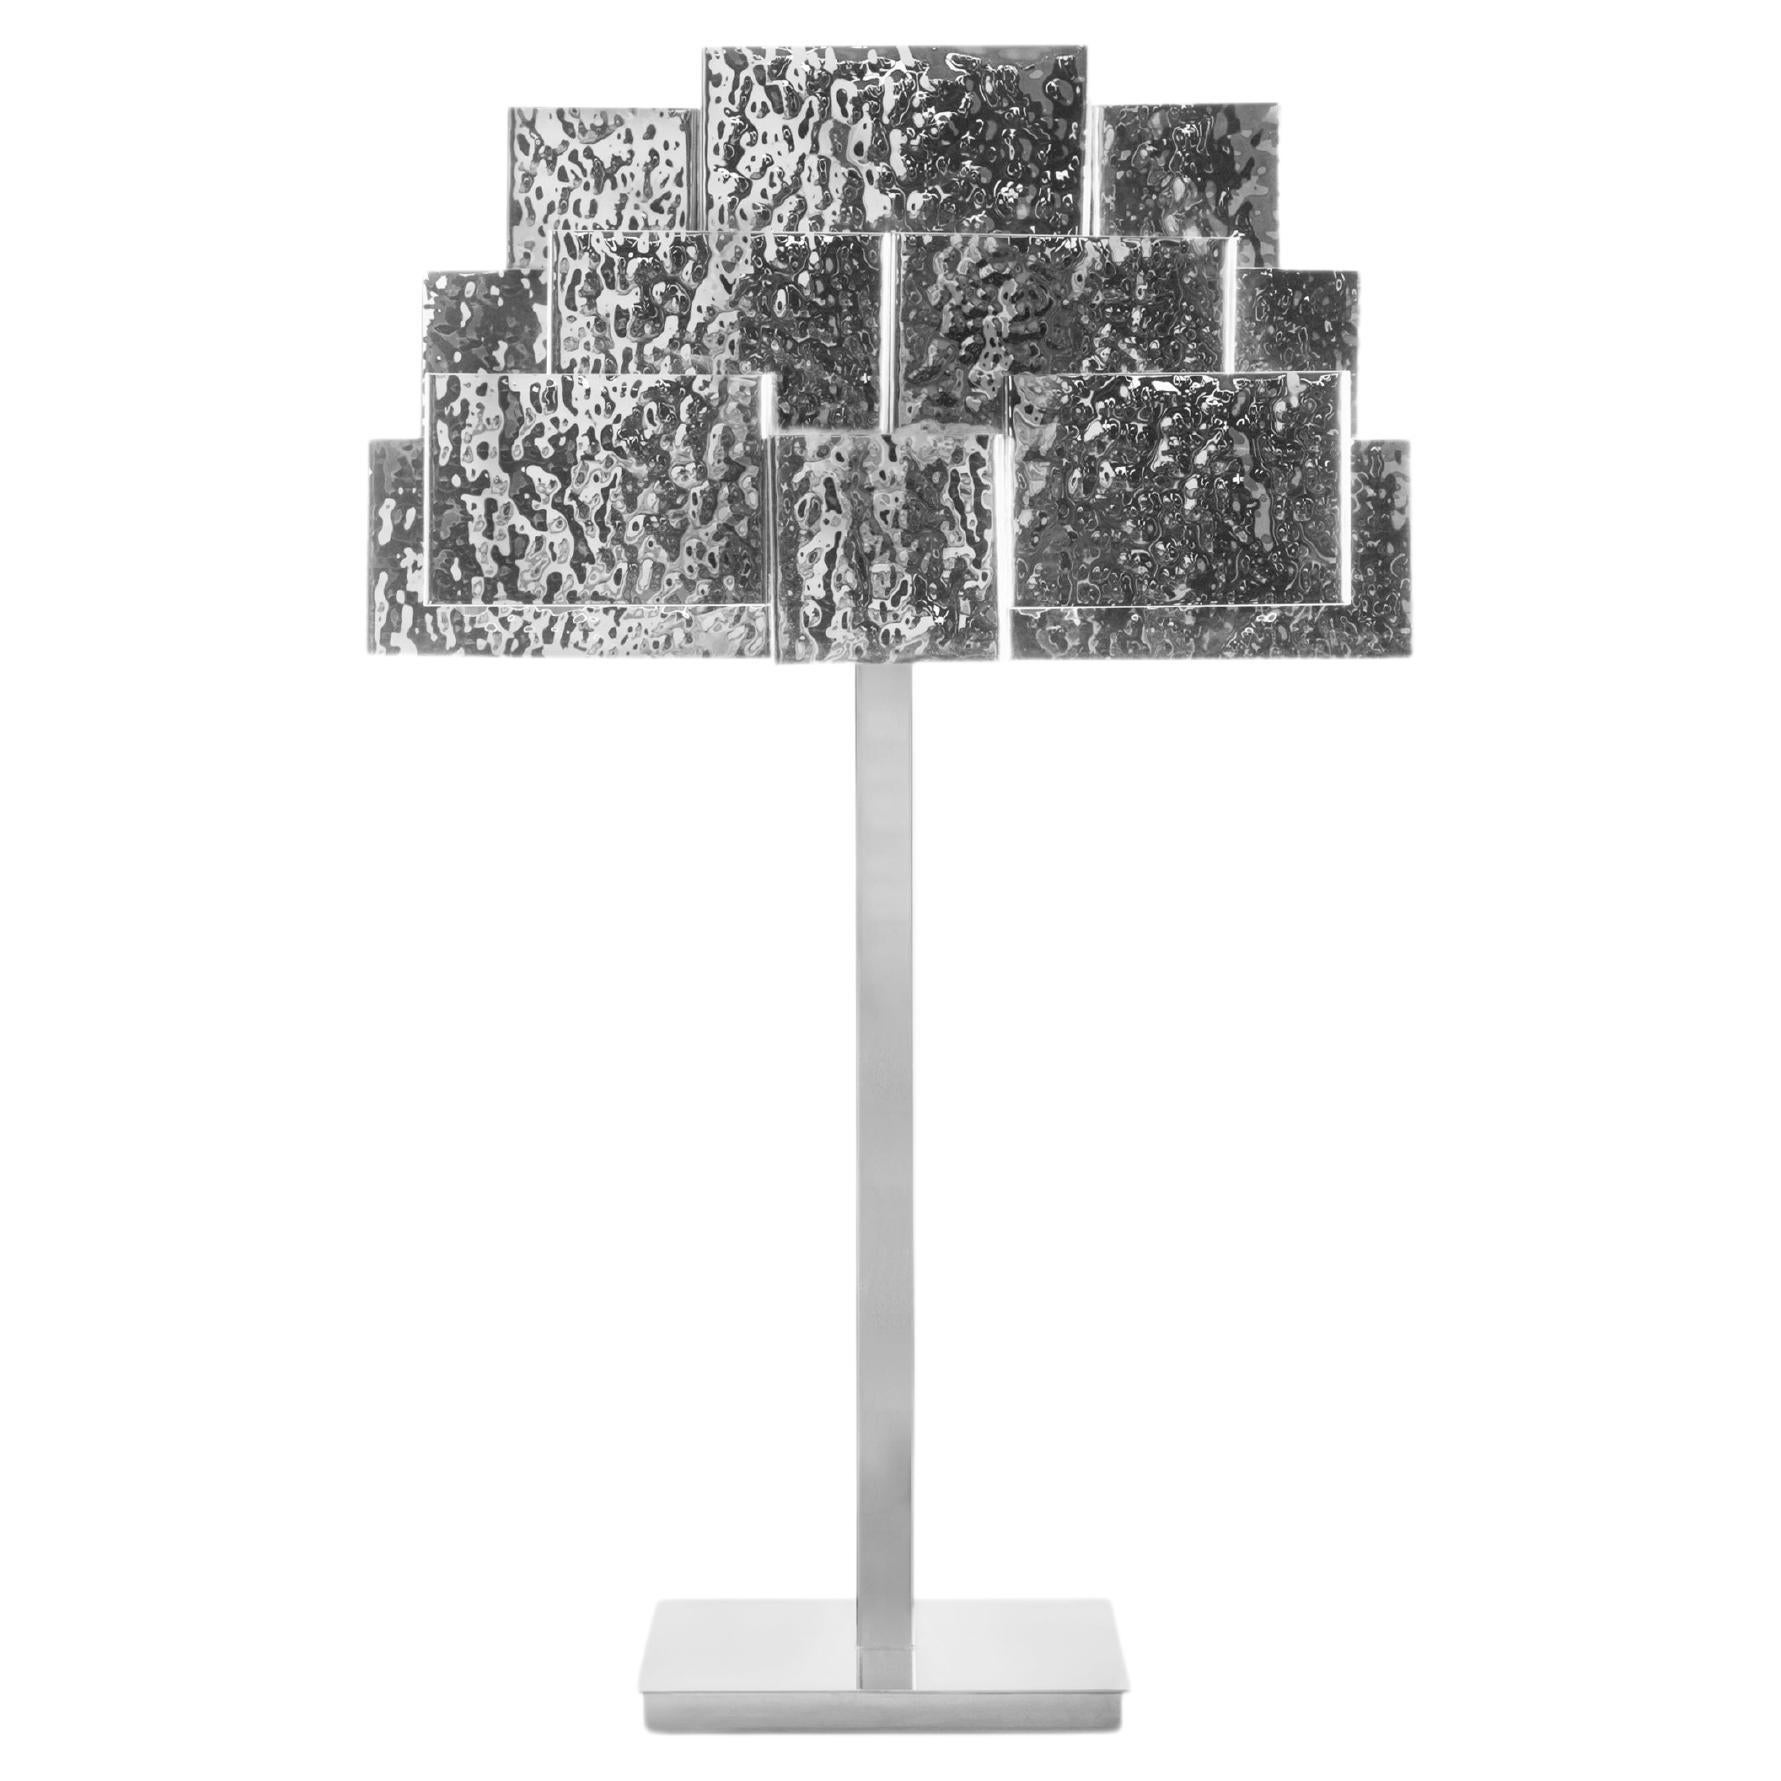 Inspiring Trees Table Lamp Hammered Nickel, InsidherLand by Joana Santos Barbosa For Sale